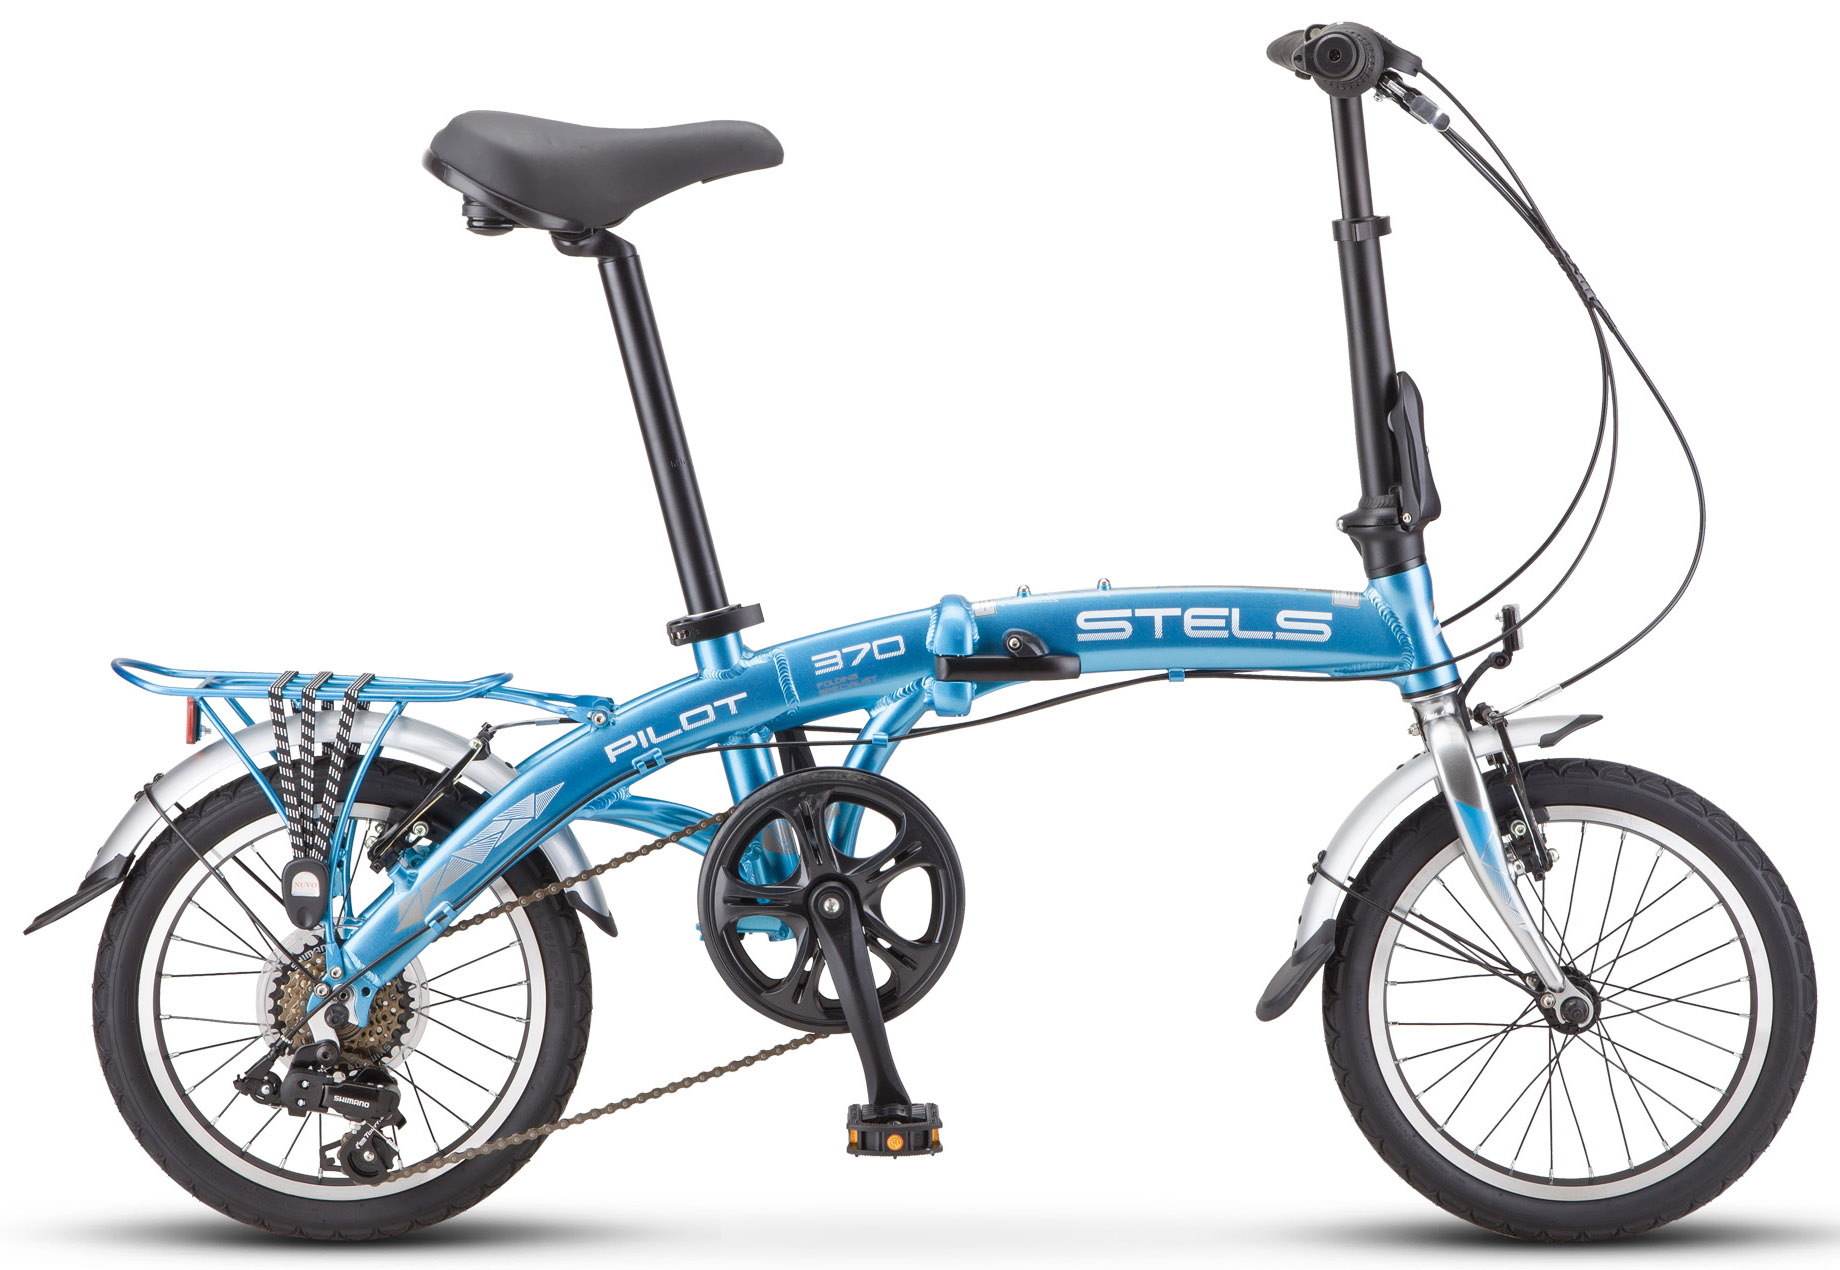  Велосипед Stels Pilot 370 16 (V010) 2019